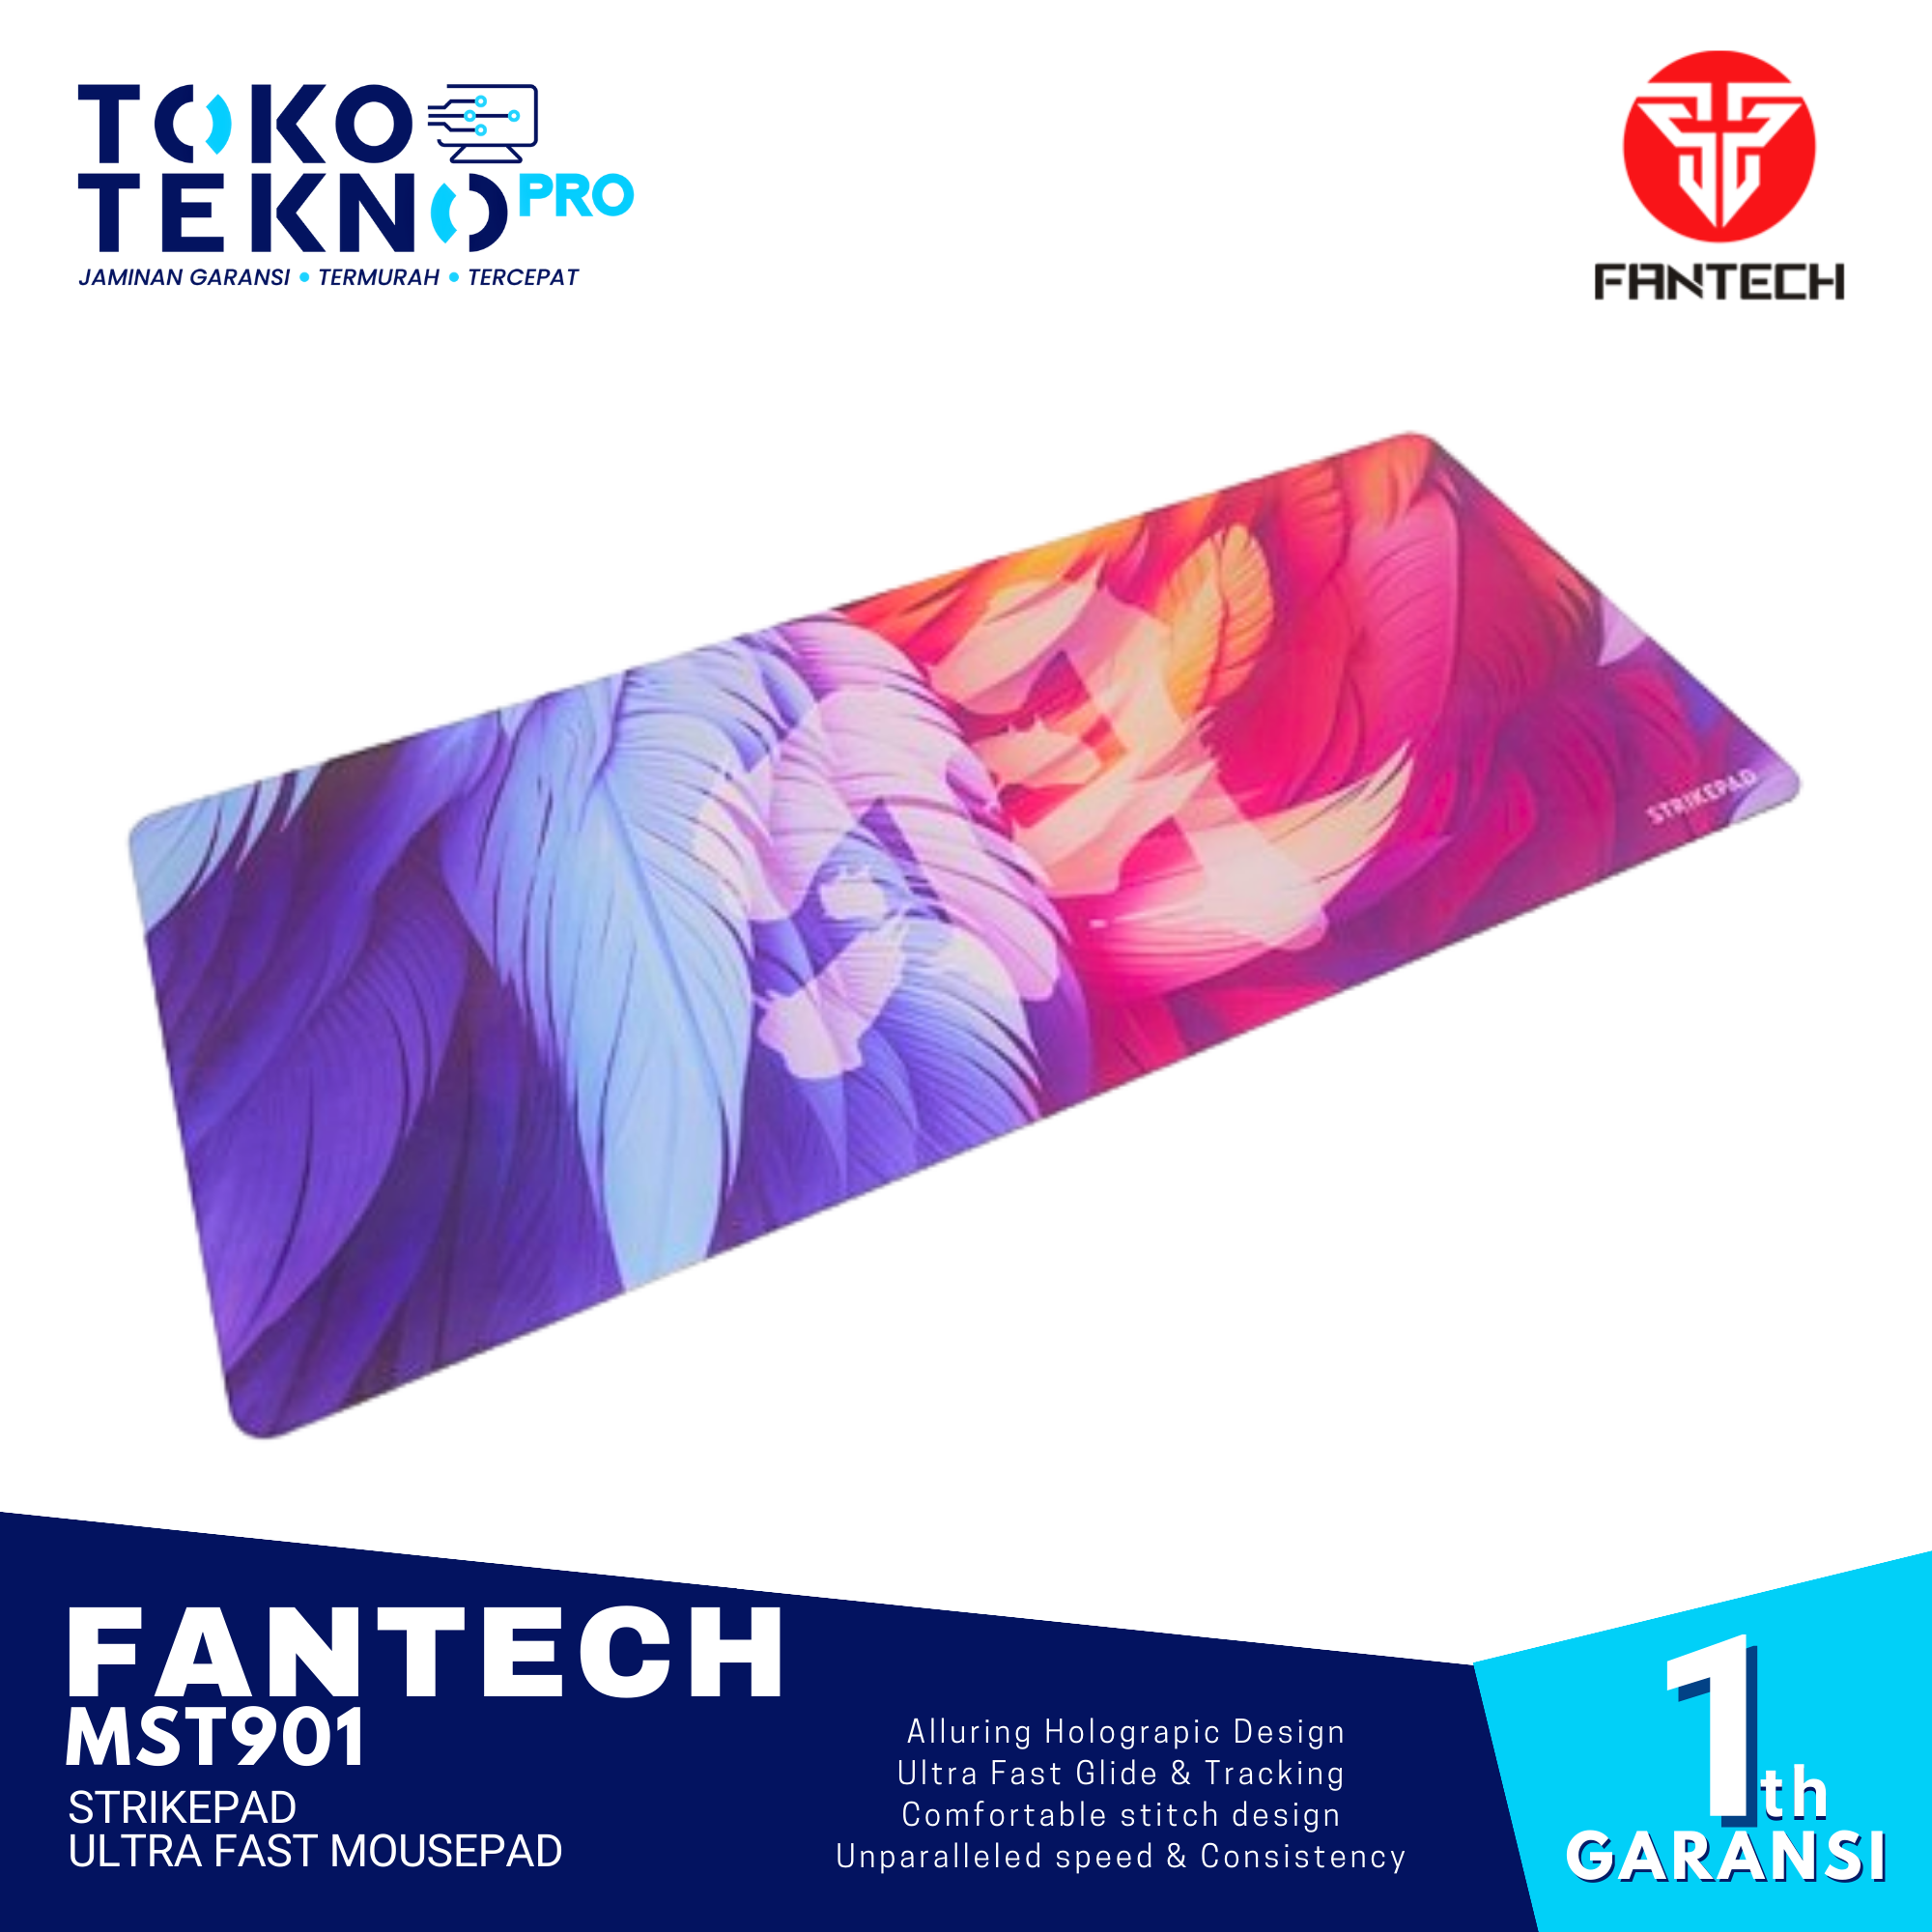 Fantech MST901